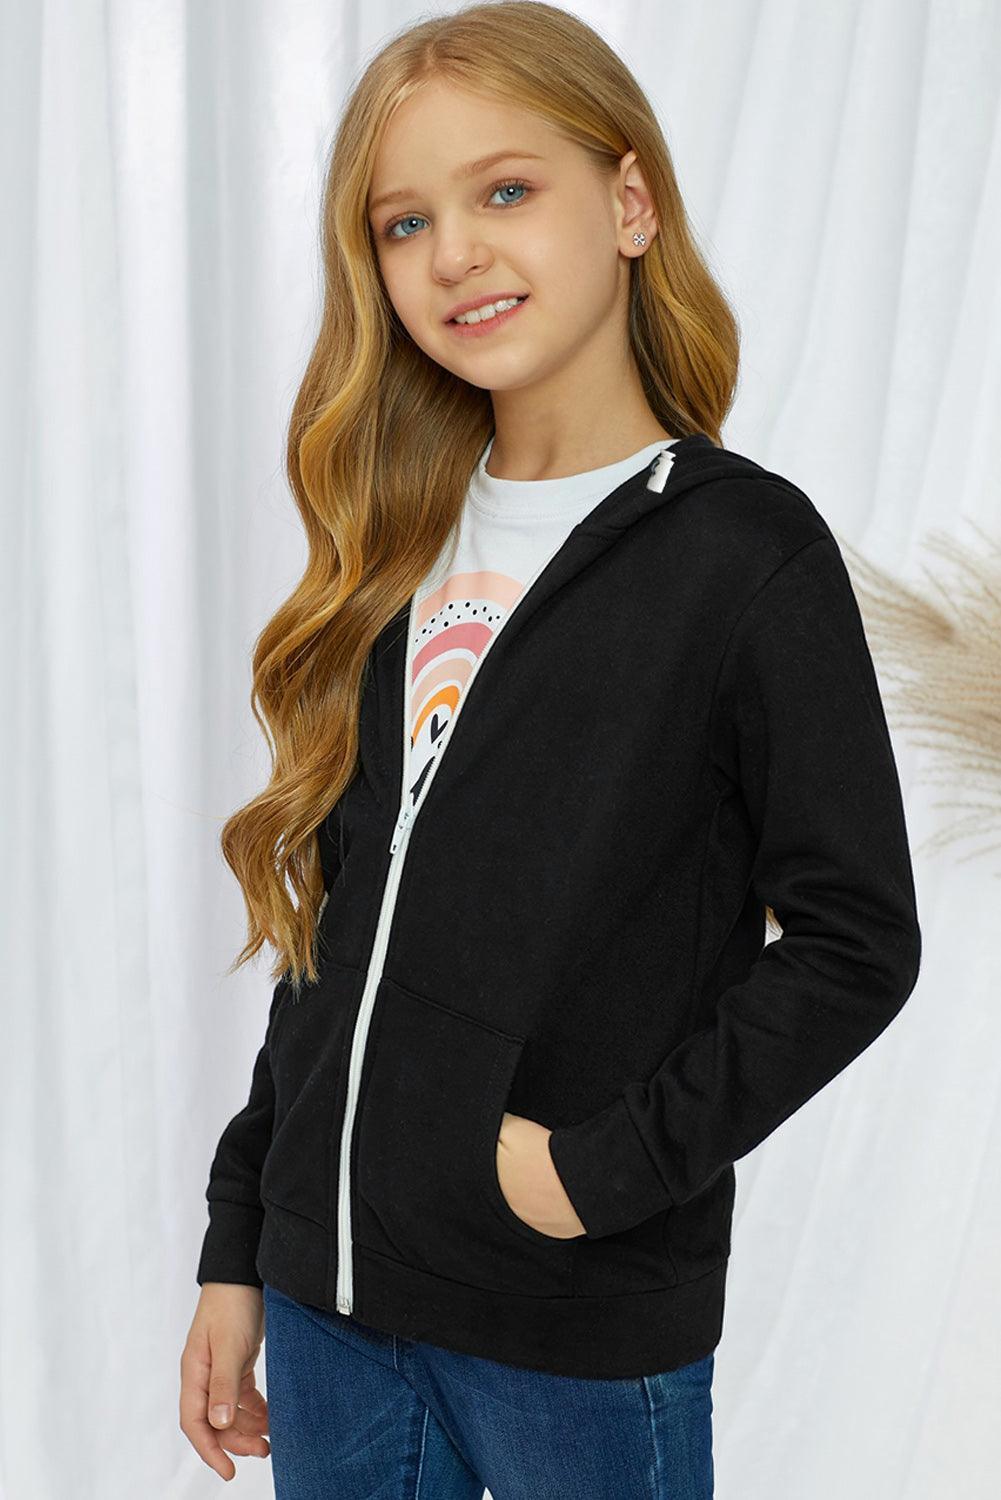 Girls Versatile Hooded Jacket With Pockets - MXSTUDIO.COM